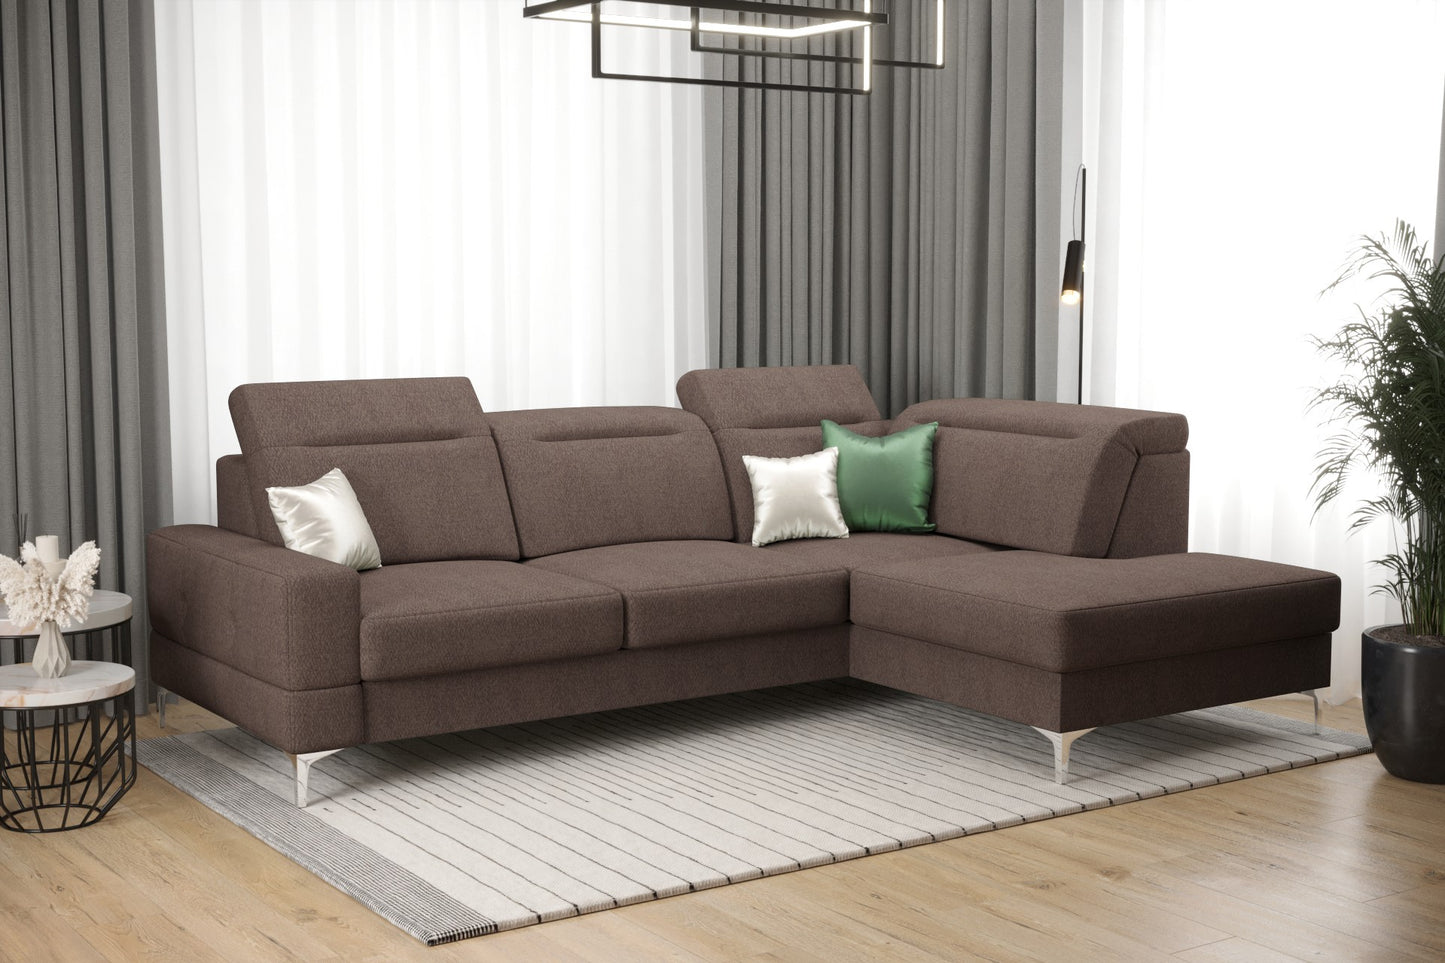 MALIBU MINI - Corner Sofa with Sleeping Function, Various Colours, Left or Right Corner Position >250 x 180cm<